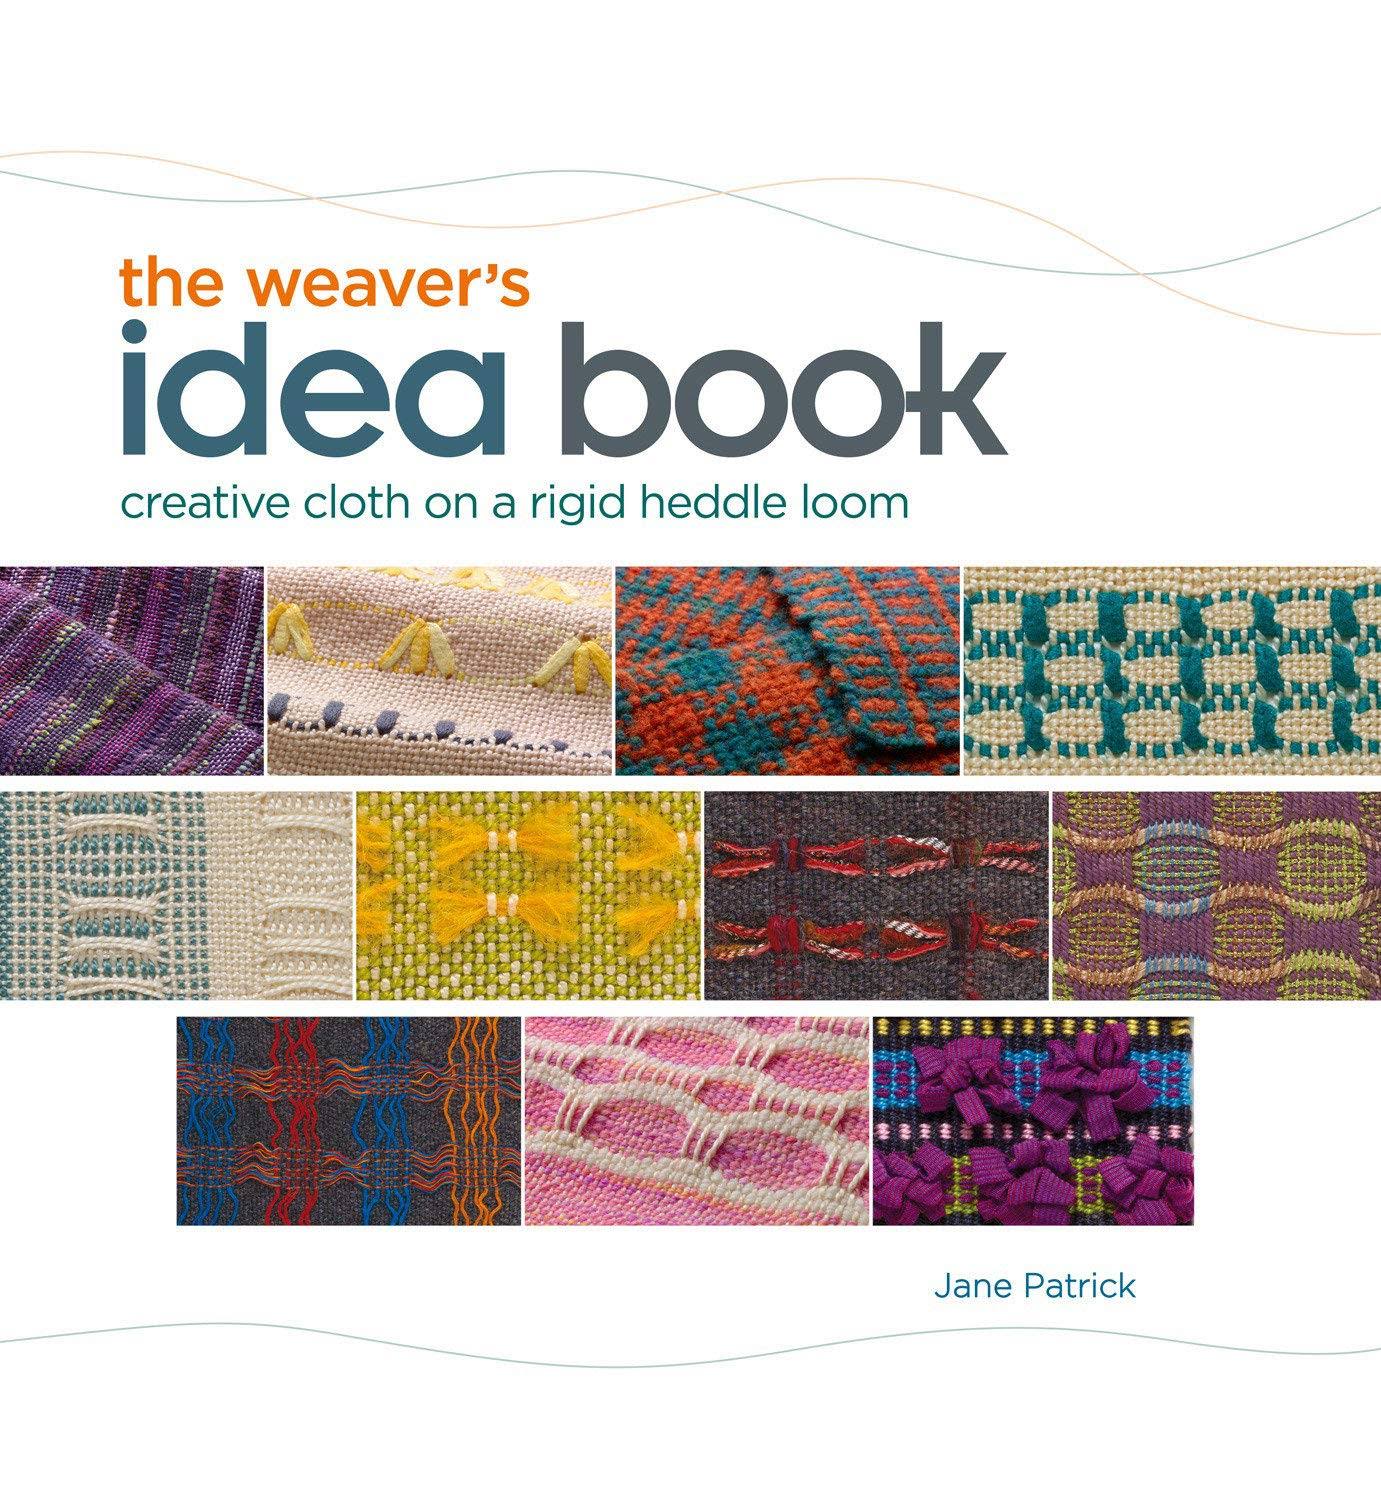 The Weaver's Idea Book: Creative Cloth on a Rigid Heddle Loom [Book]